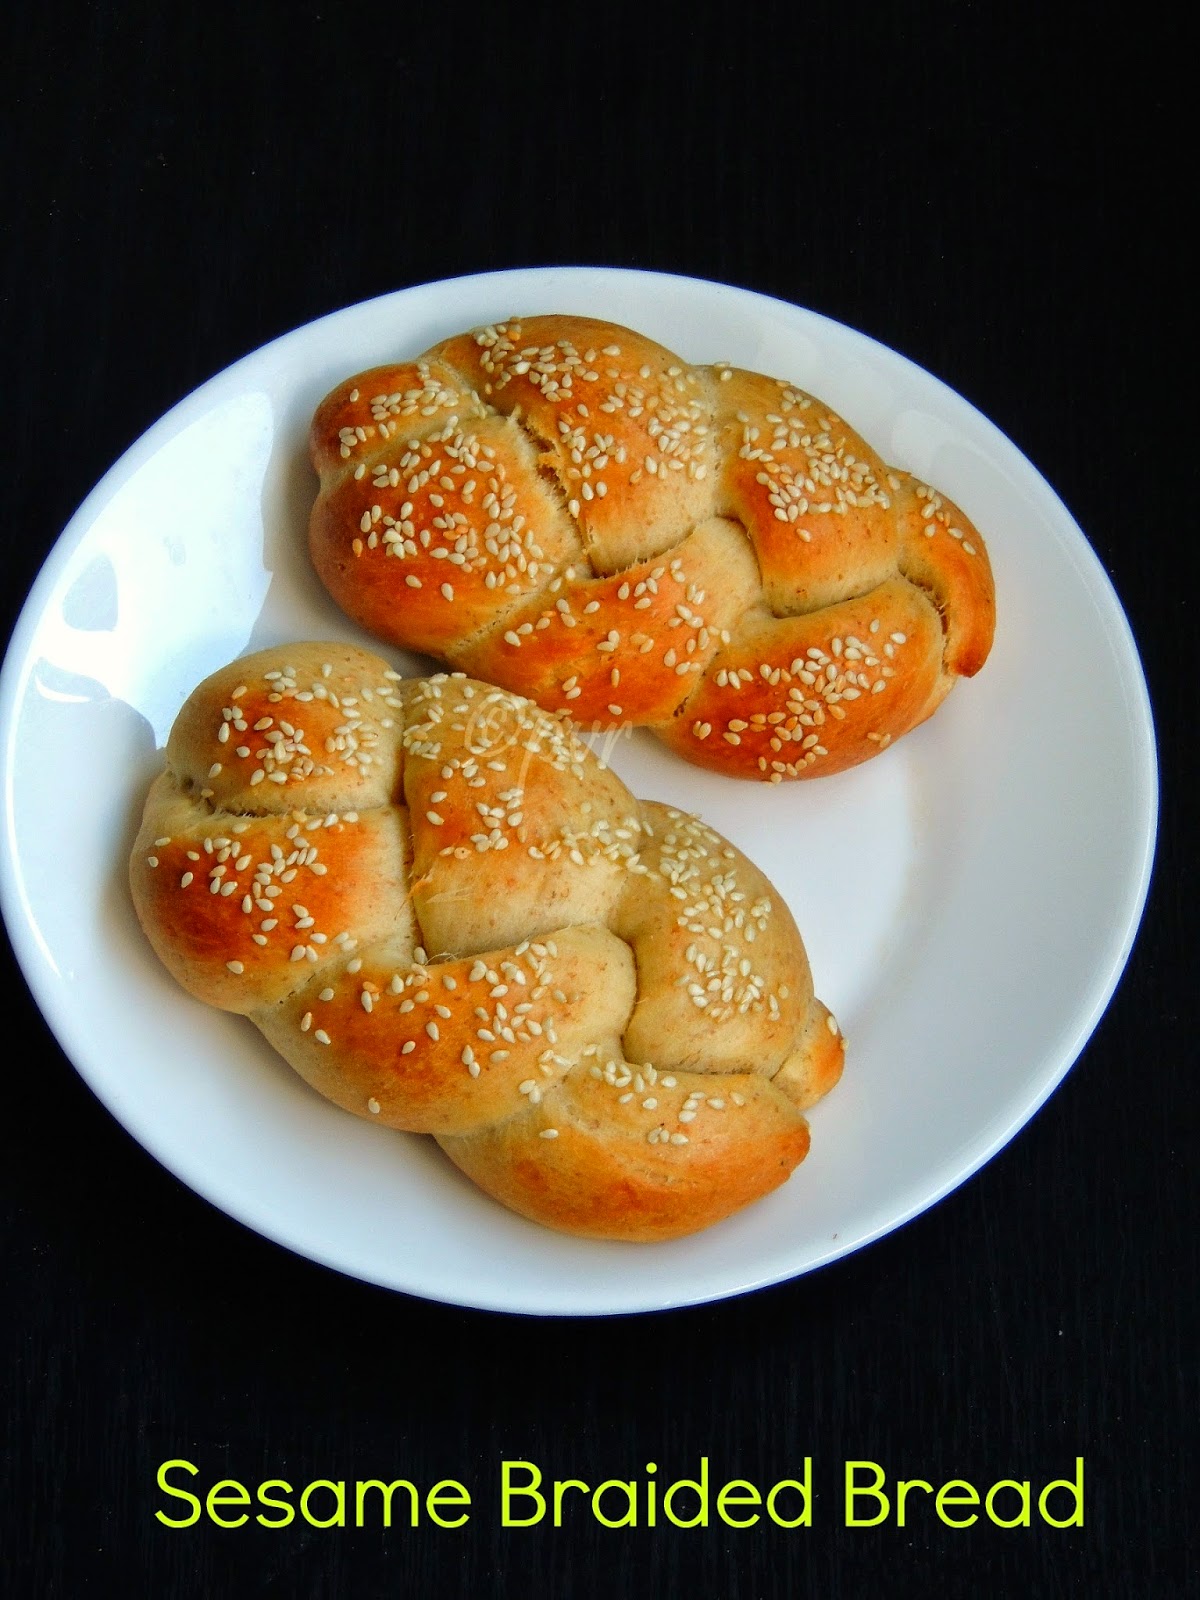 Braided Sesame Bread